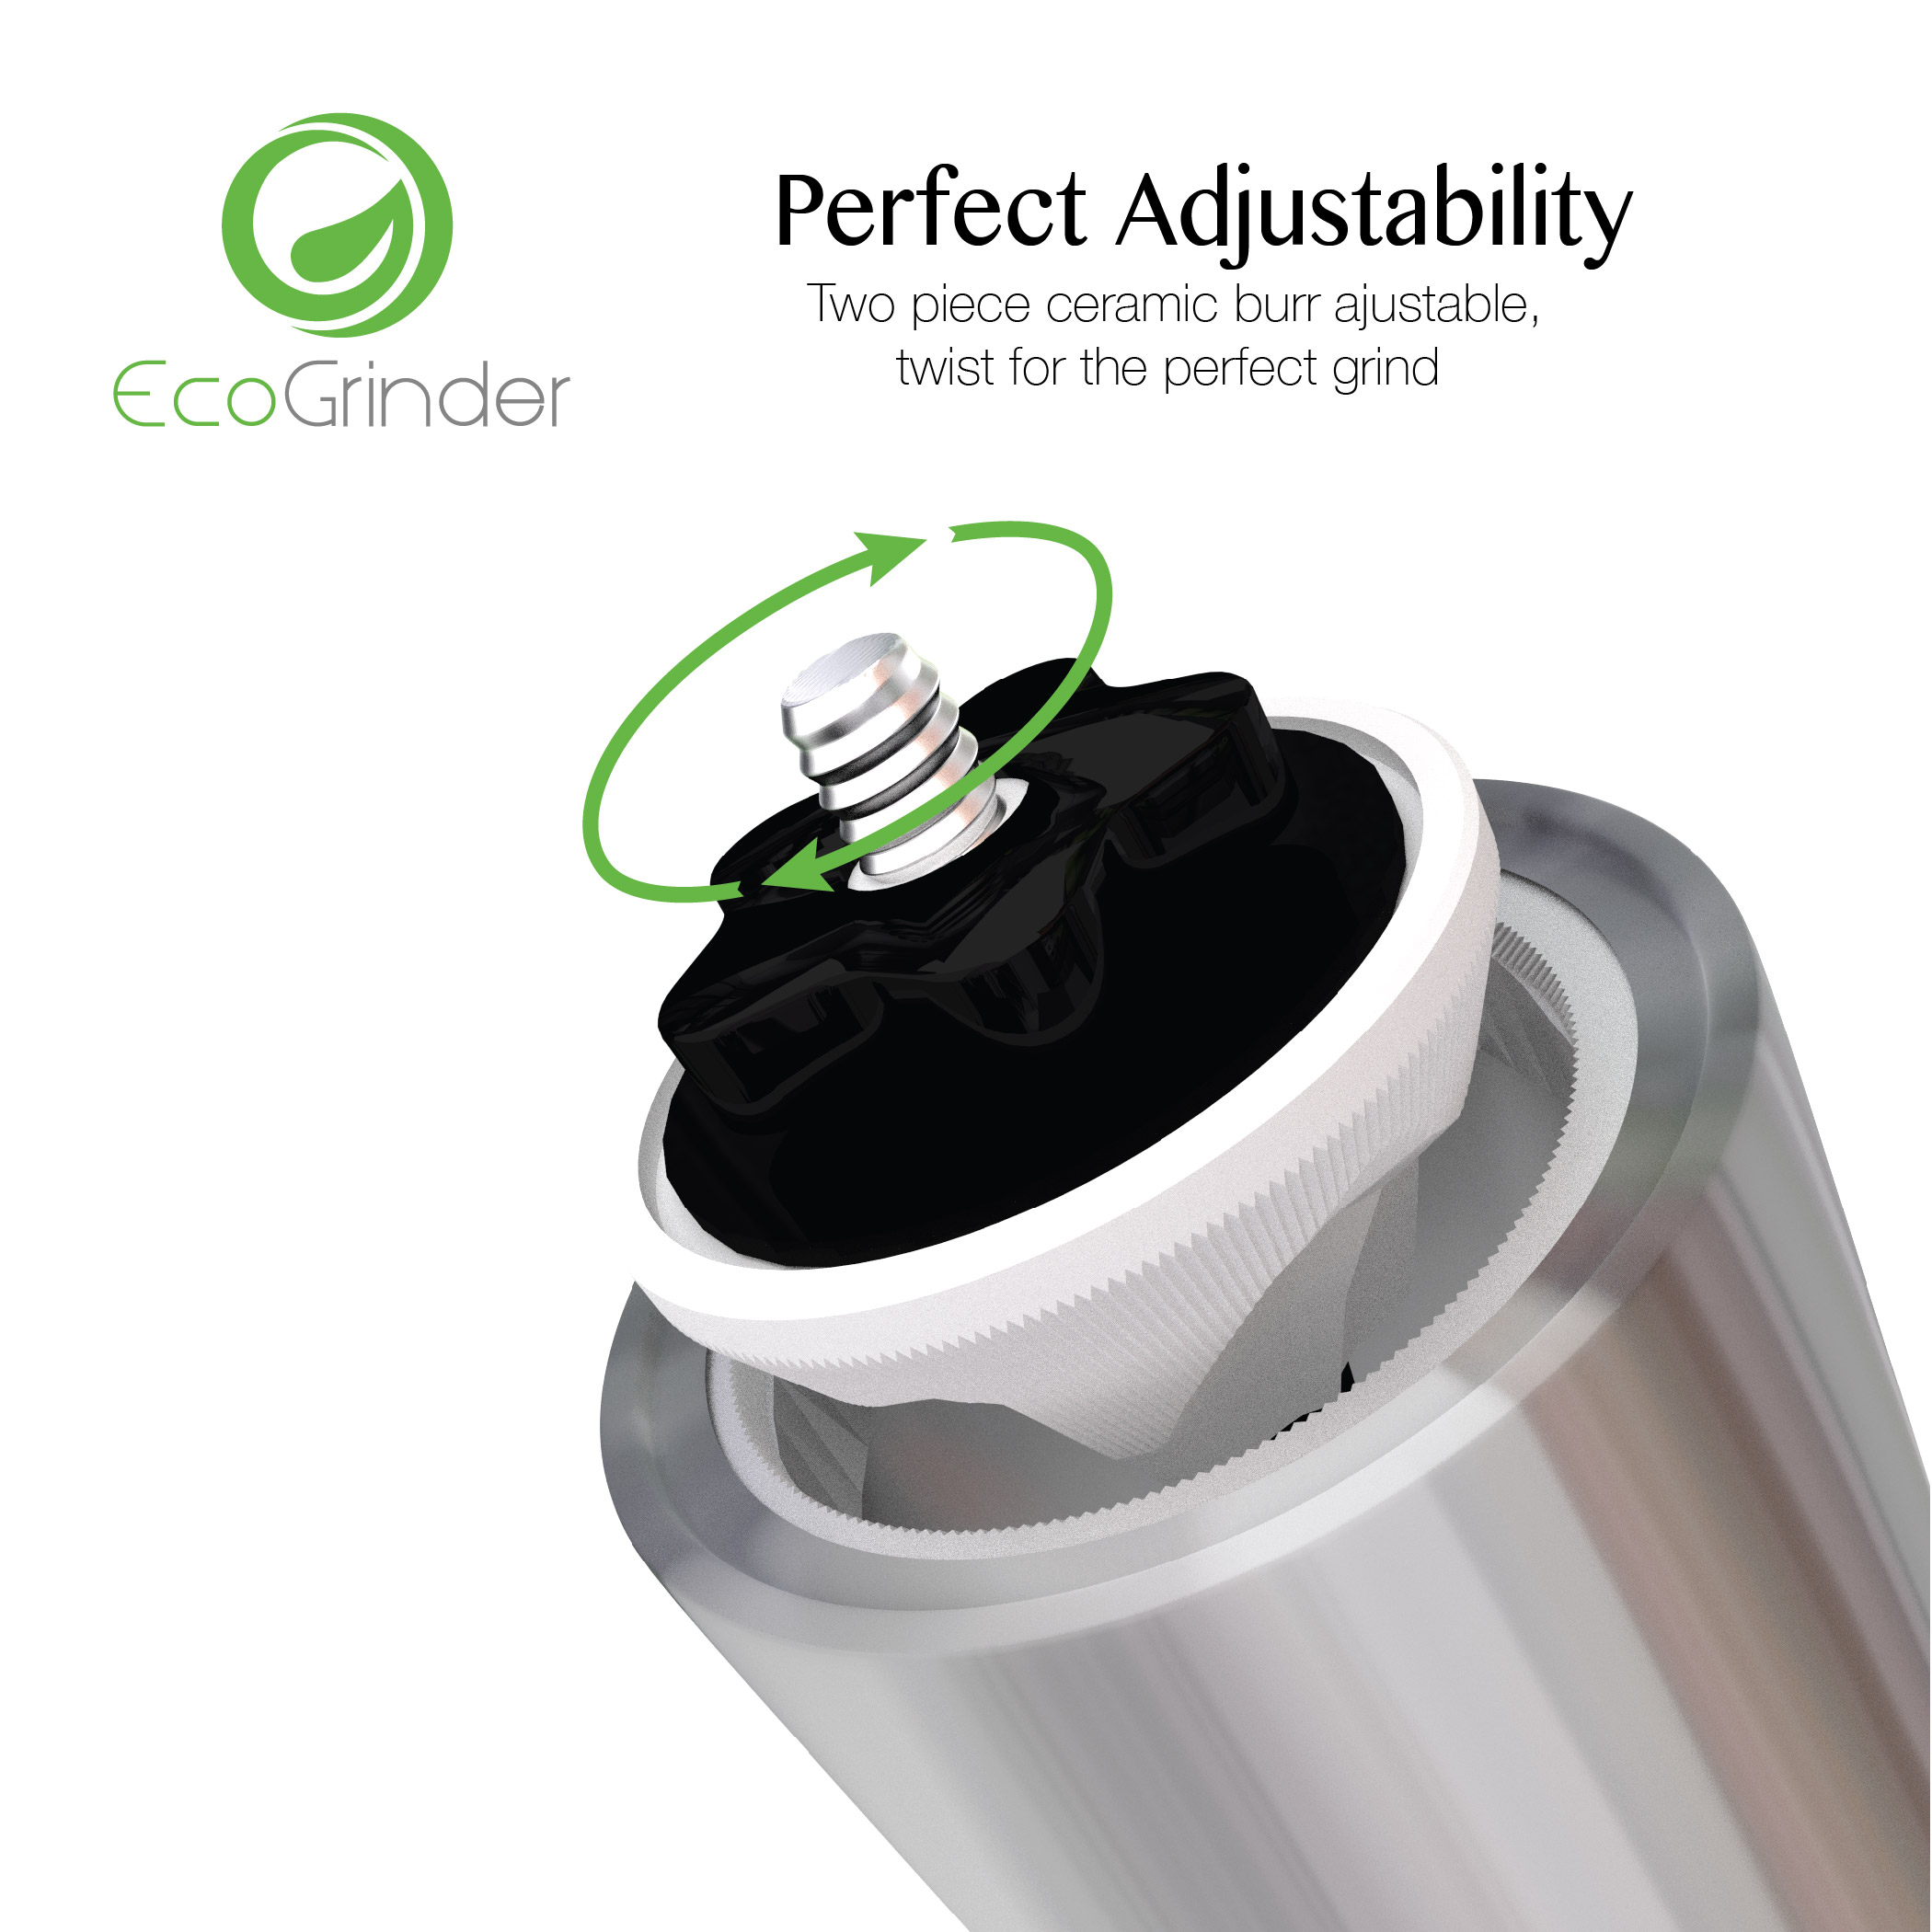 Eco Grinder – Amazon Listing Images